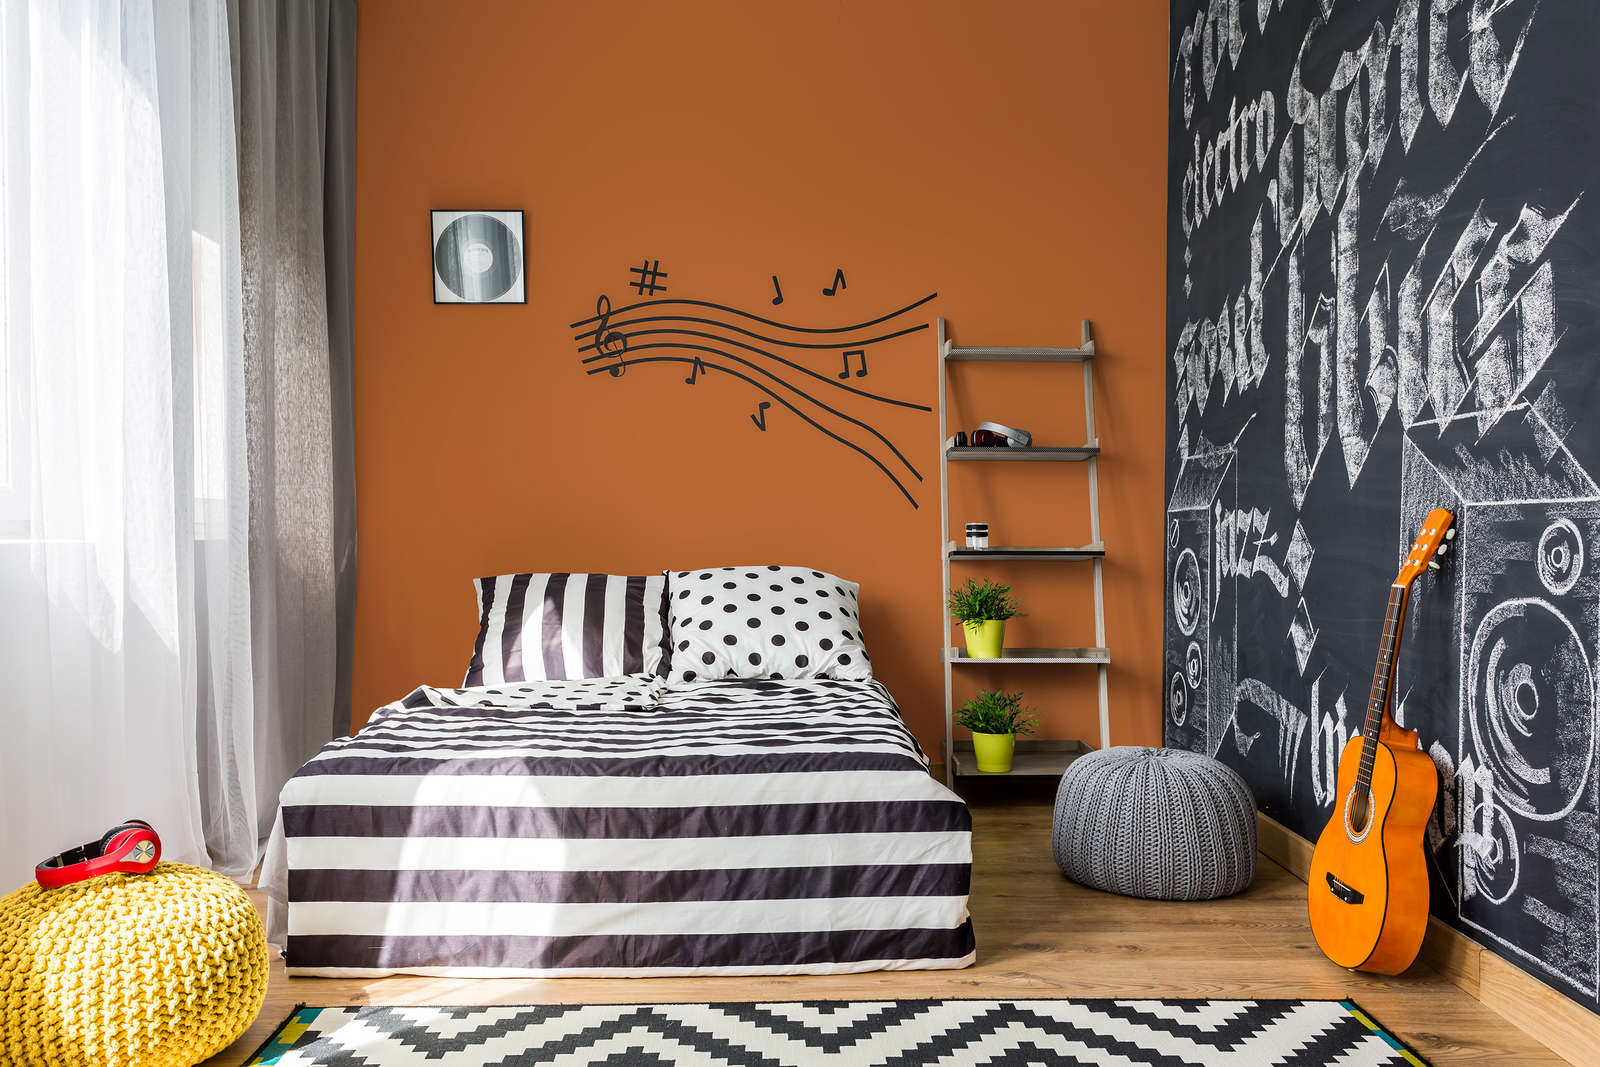             Premium Wall Paint Warm Orange »Pretty Peach« NW903 – 2.5 litre
        